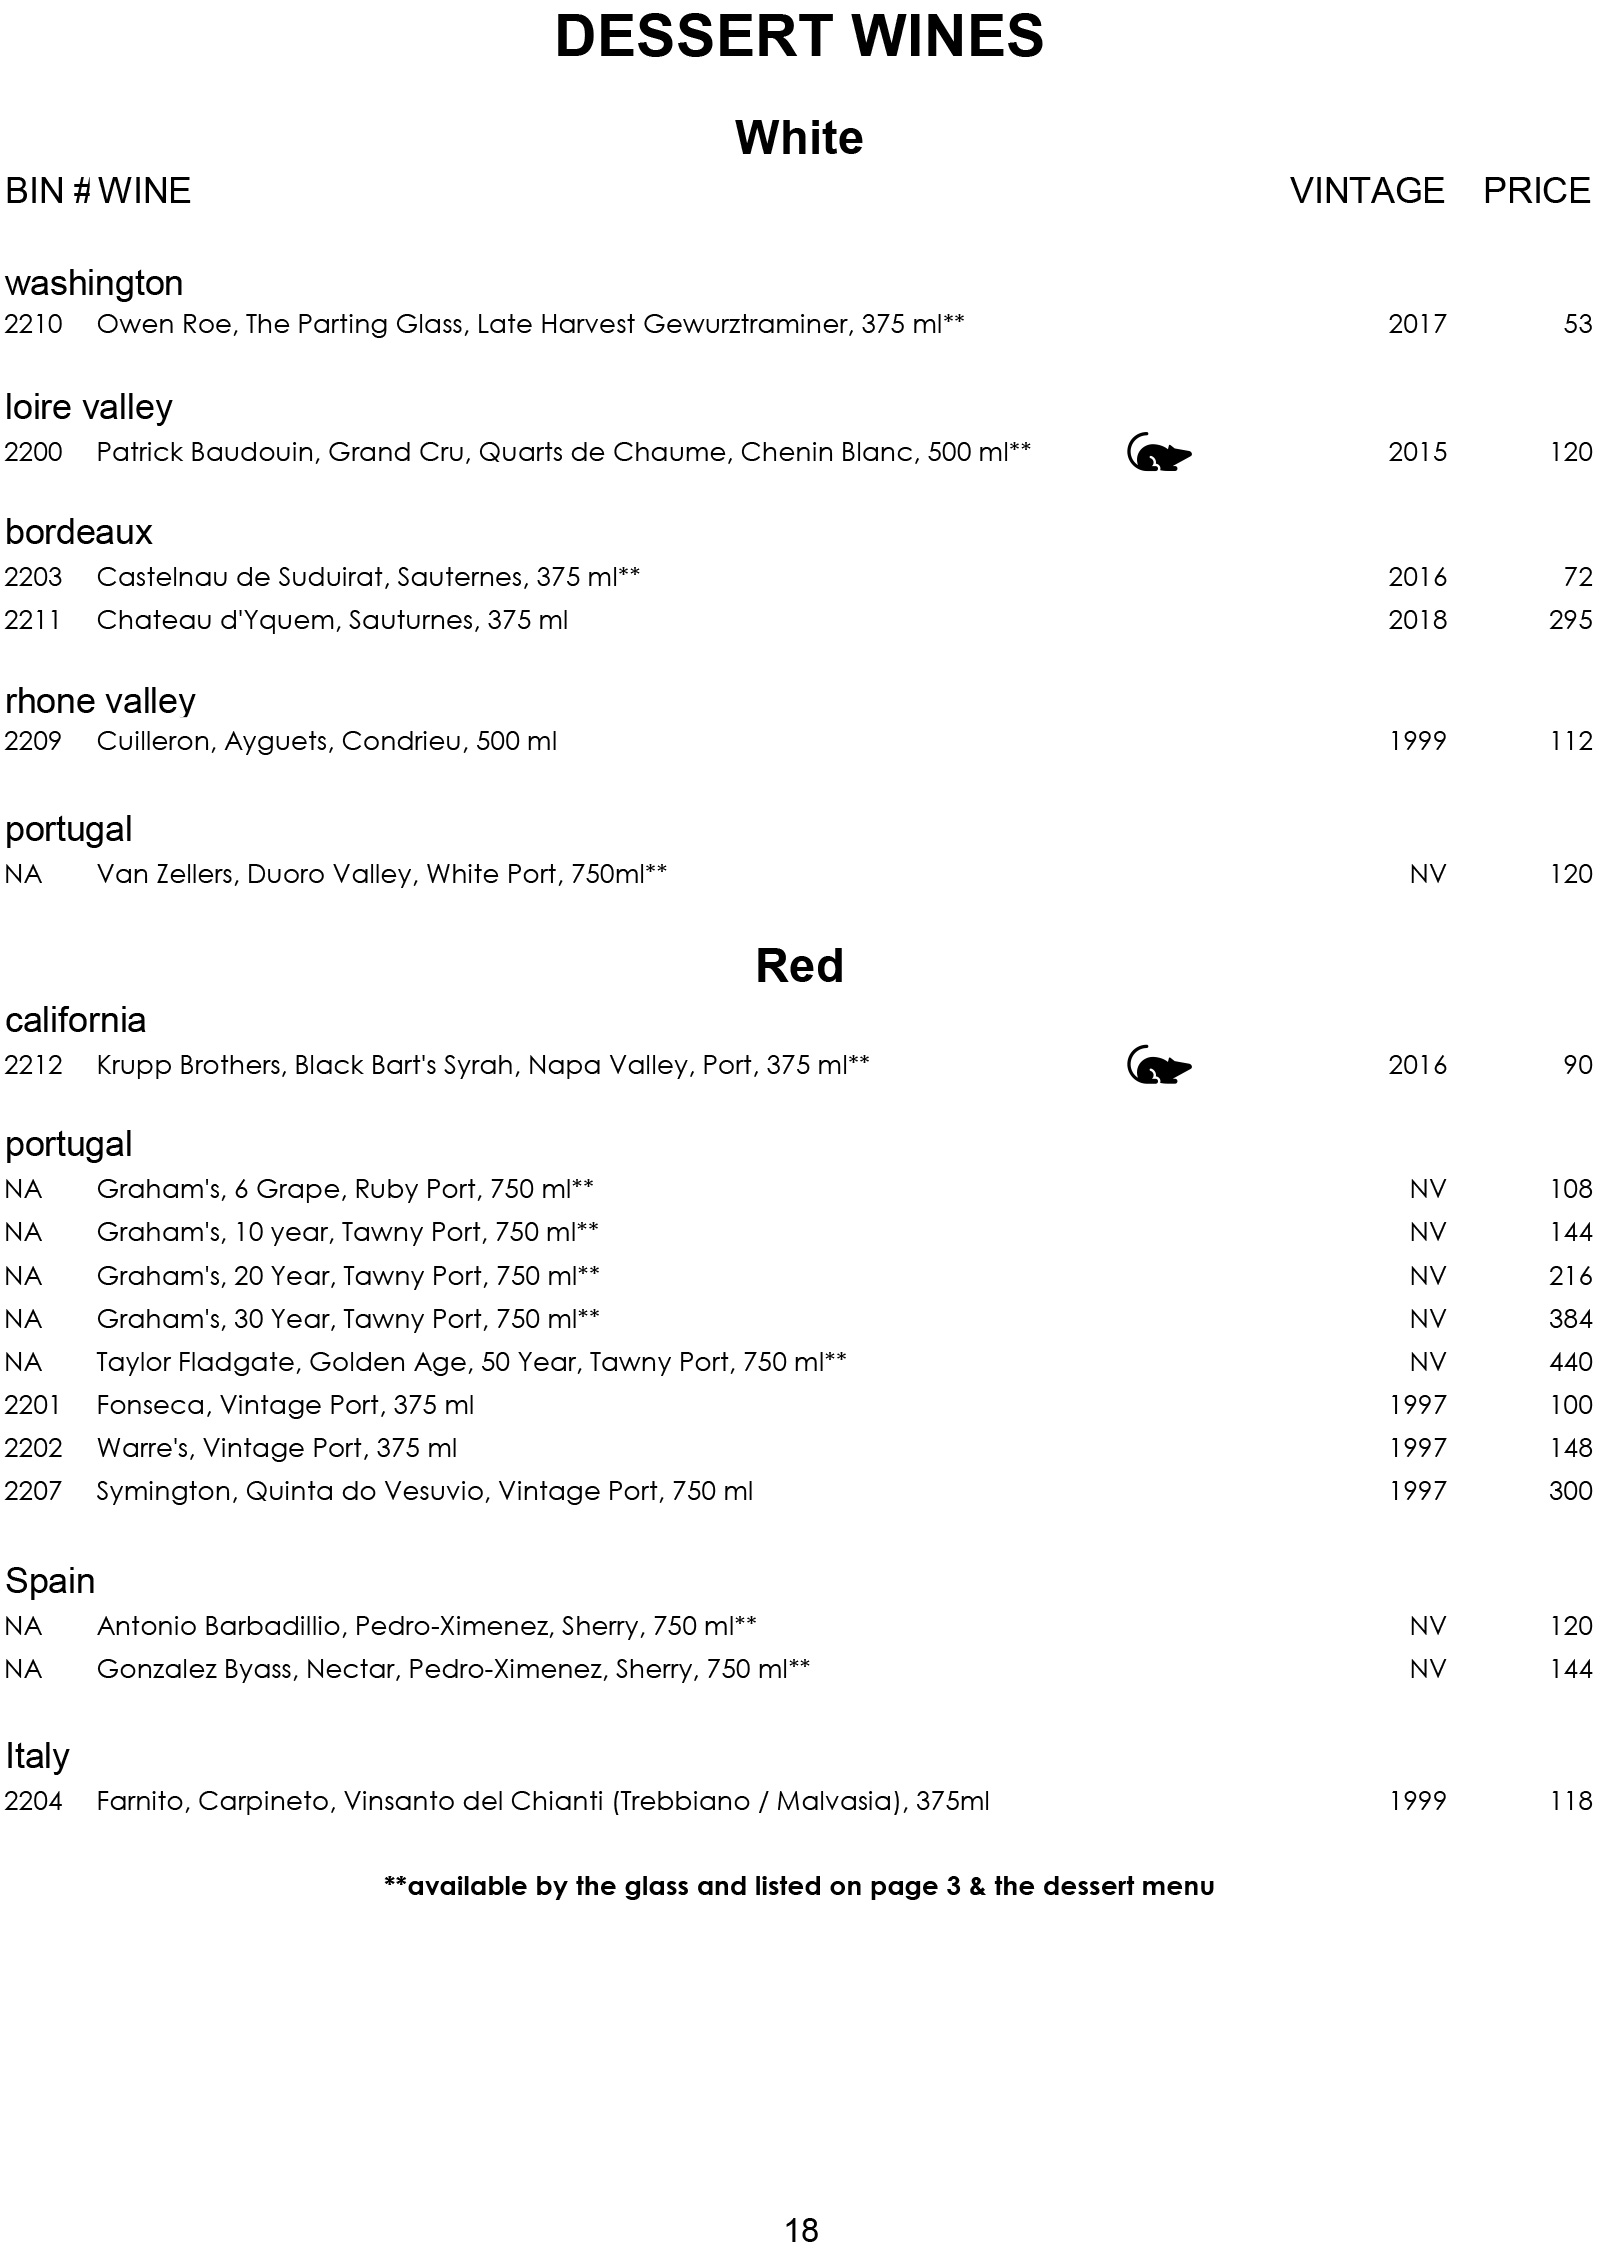 Wine List for Rat's Restaurant - Dessert Wines